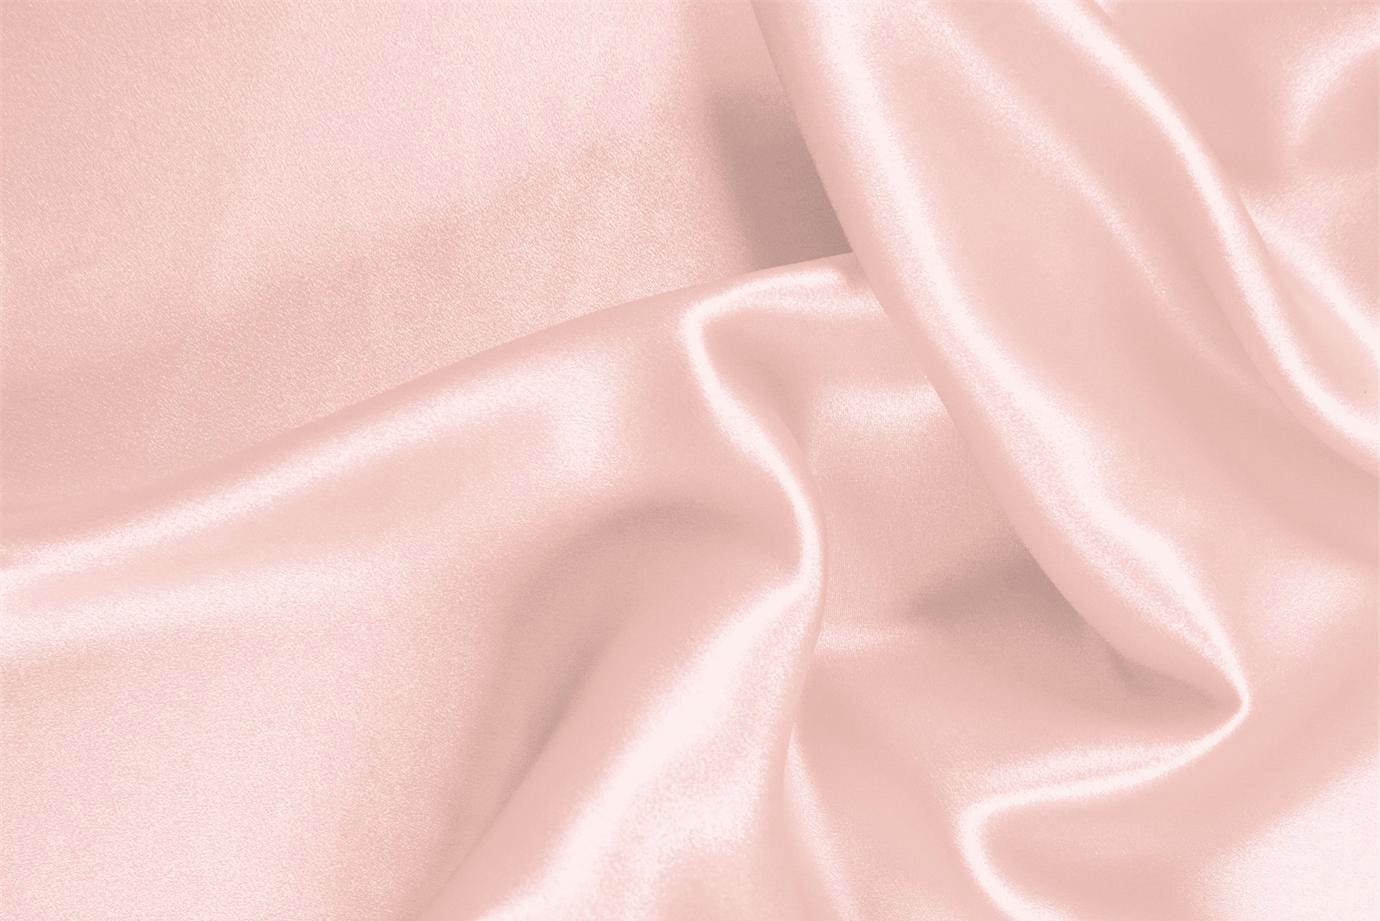 Quartz Pink Silk Crêpe Satin fabric for dressmaking